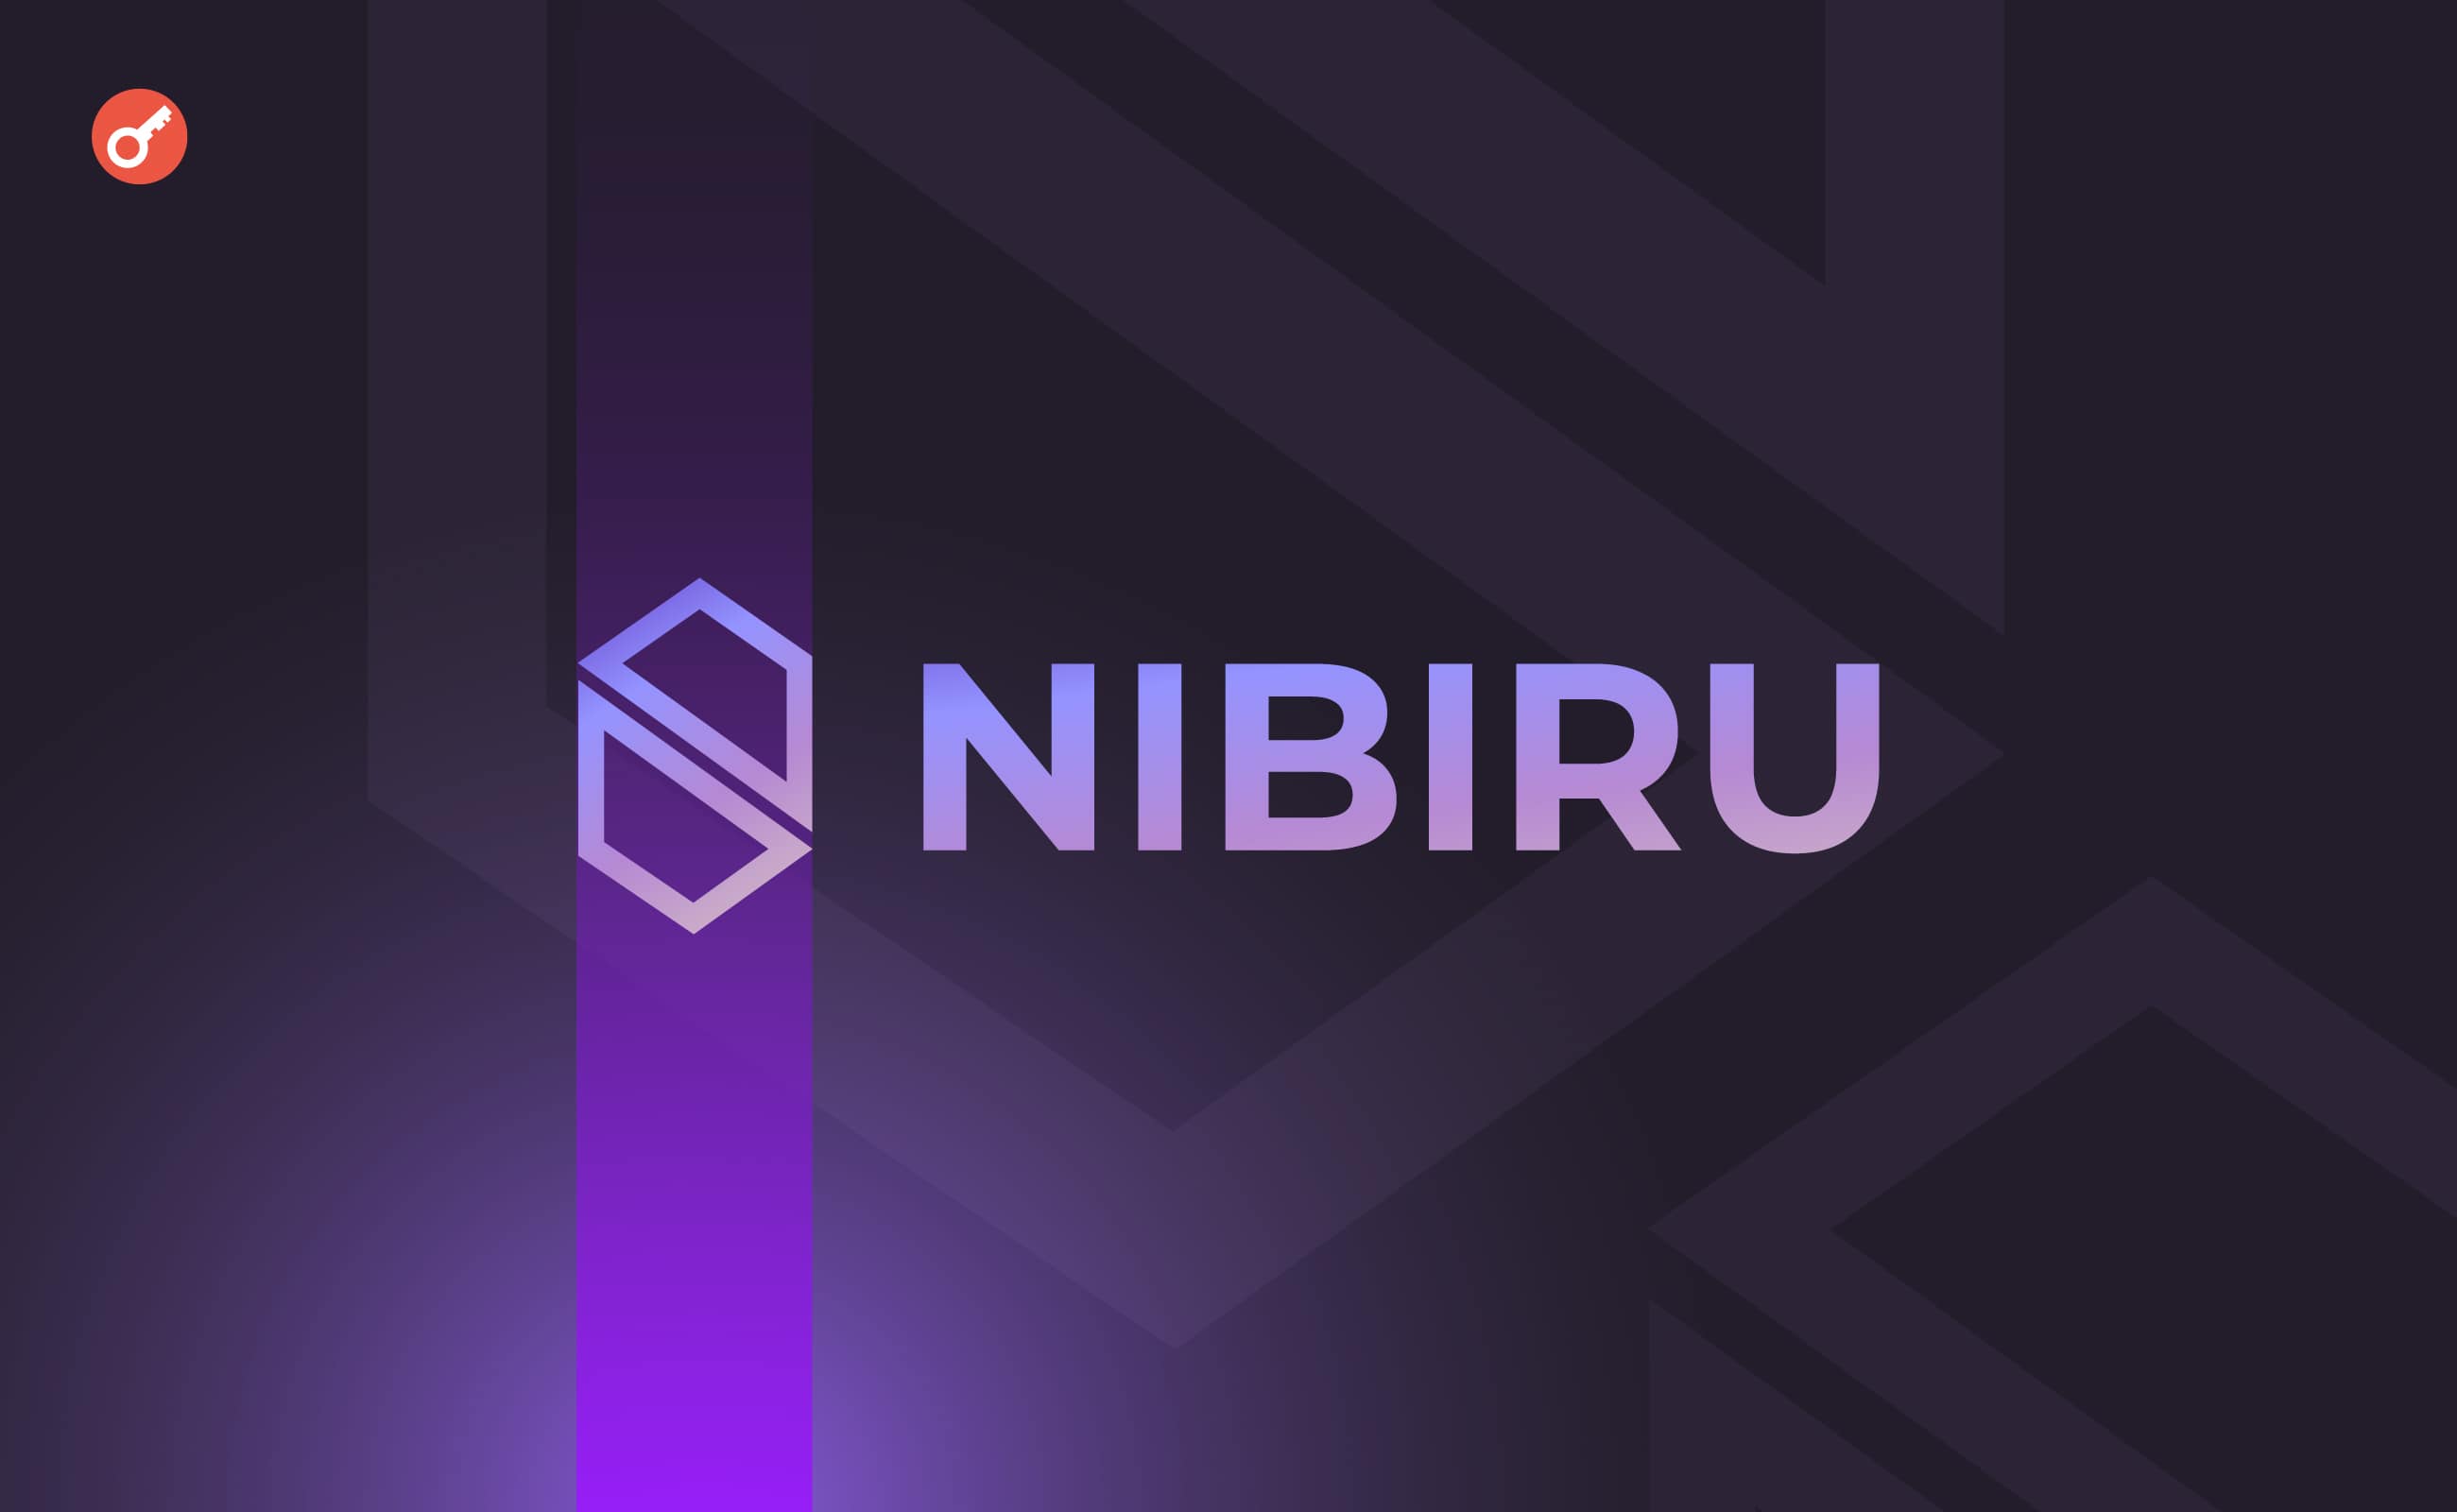 Nibiru Chain привлекла $12 млн инвестиций. Заглавный коллаж новости.